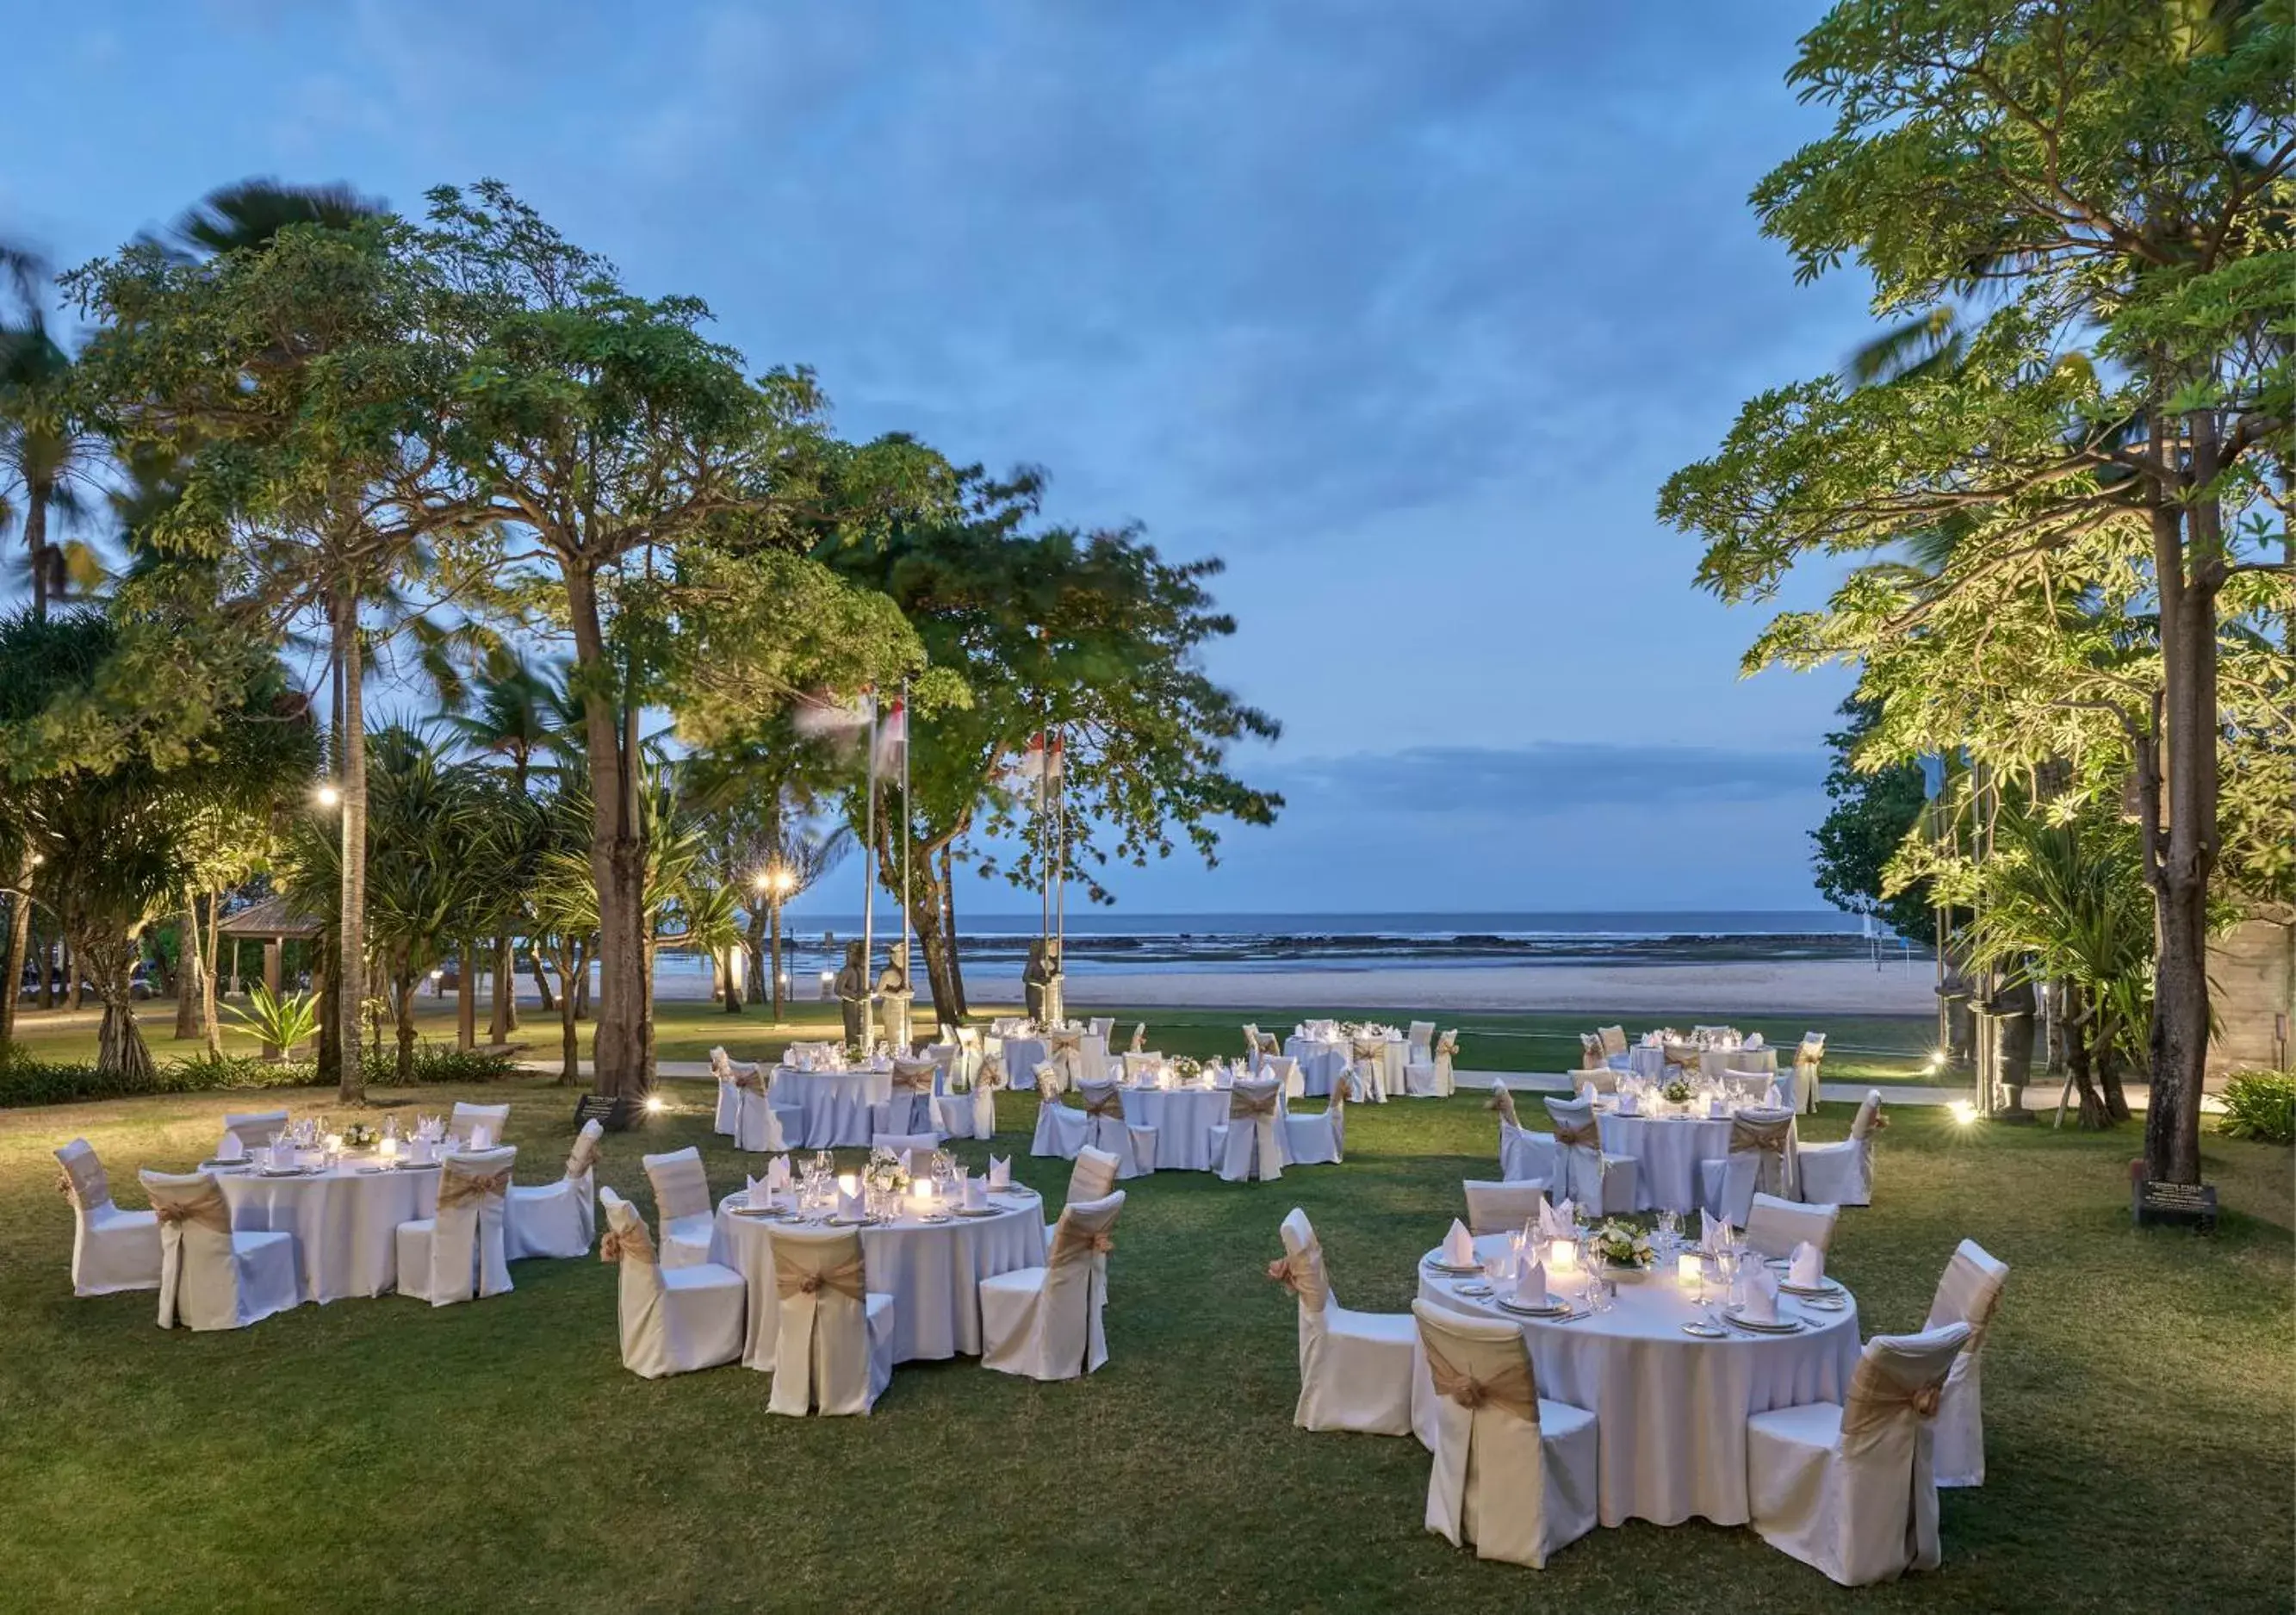 Meeting/conference room, Banquet Facilities in Sofitel Bali Nusa Dua Beach Resort